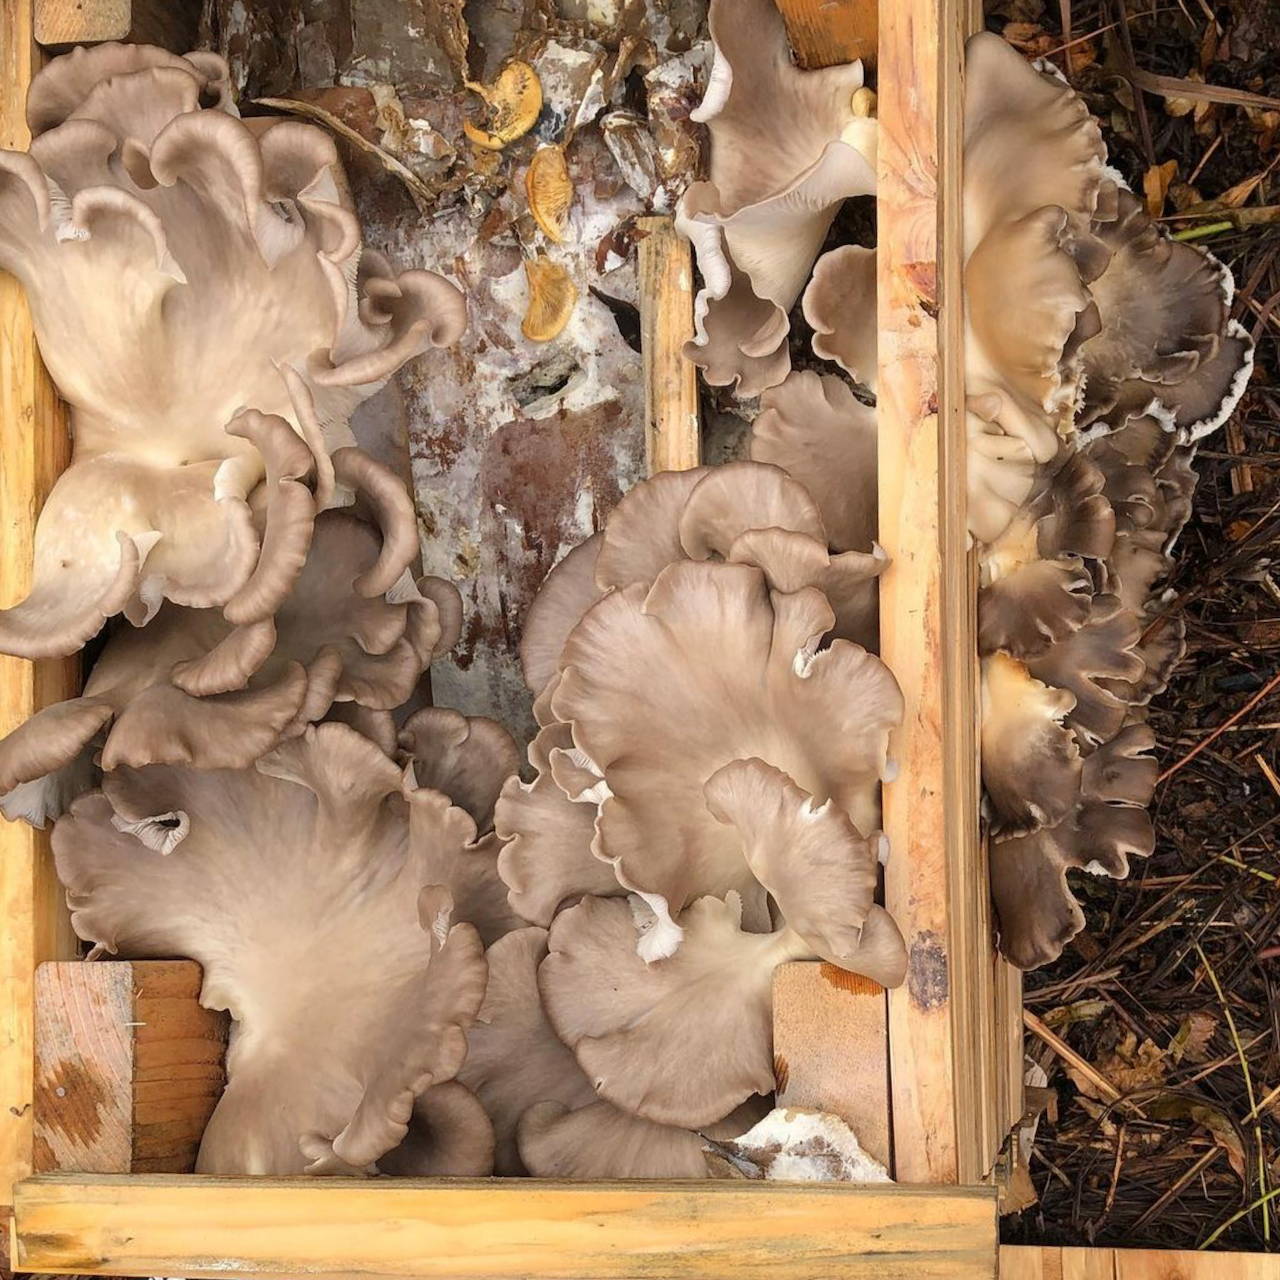 Huge flush of Italian oyster mushrooms